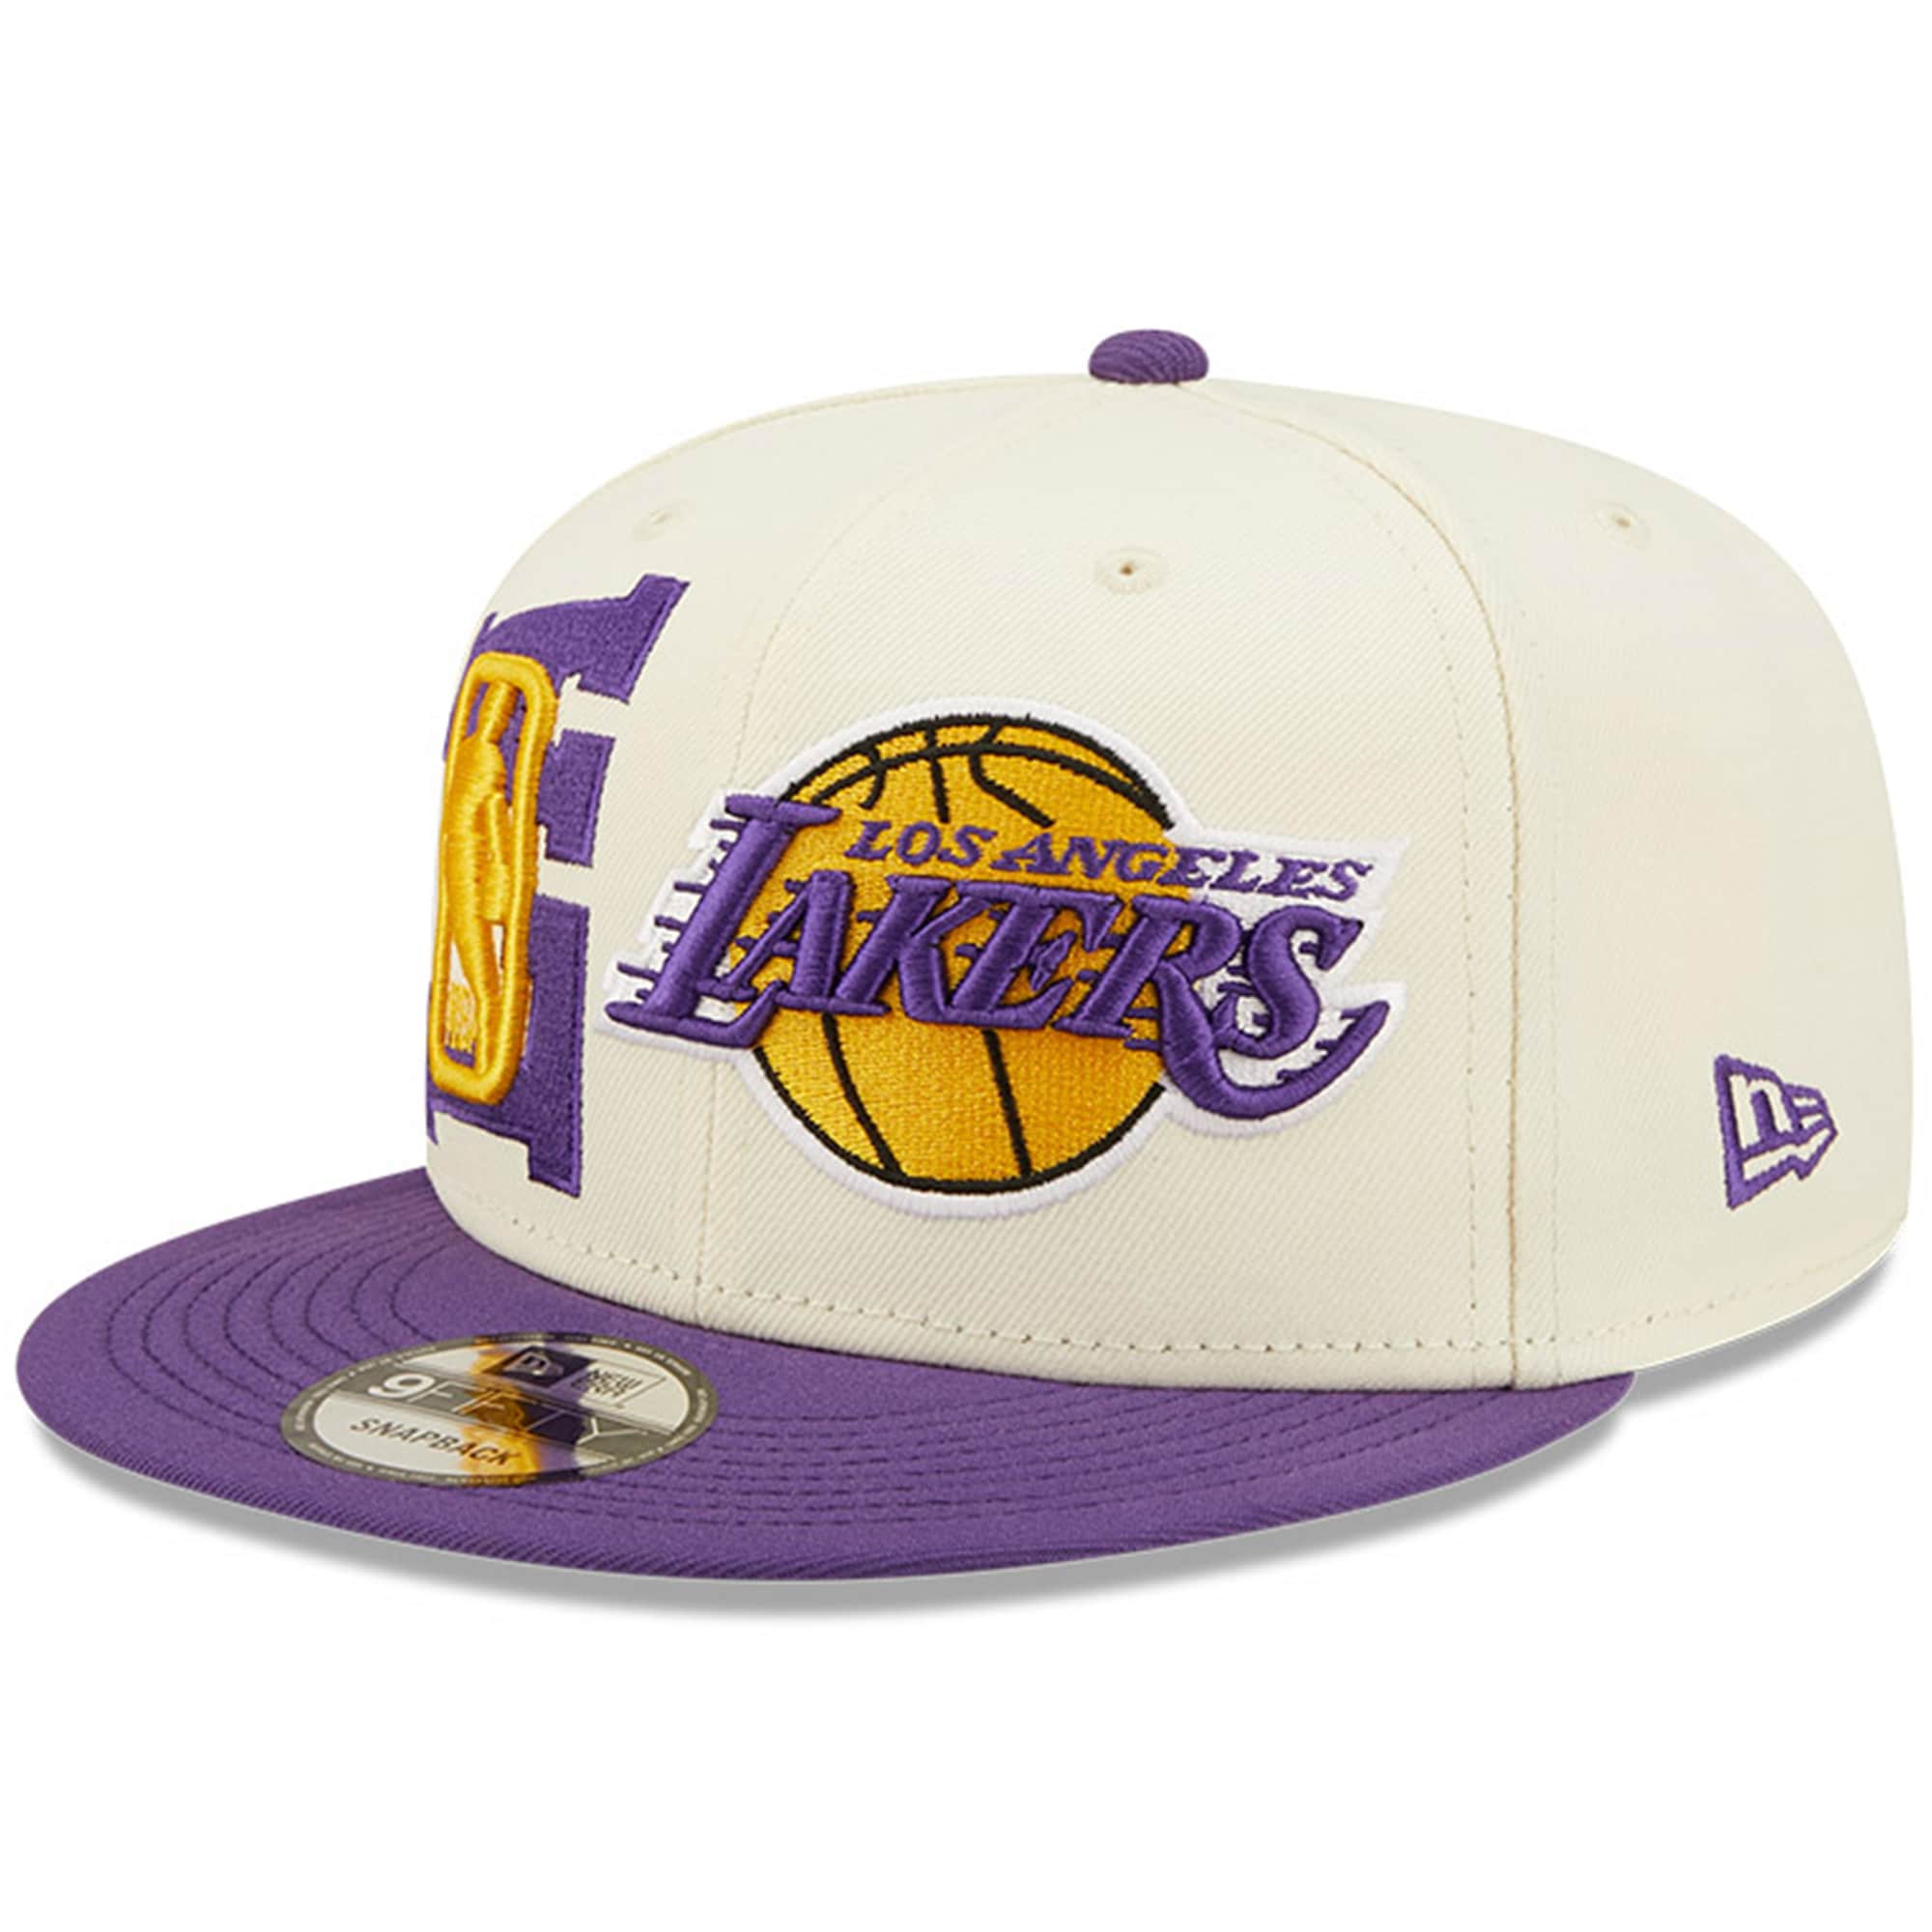 Los Angeles Lakers Hats, Lakers Caps, Beanie, Snapbacks